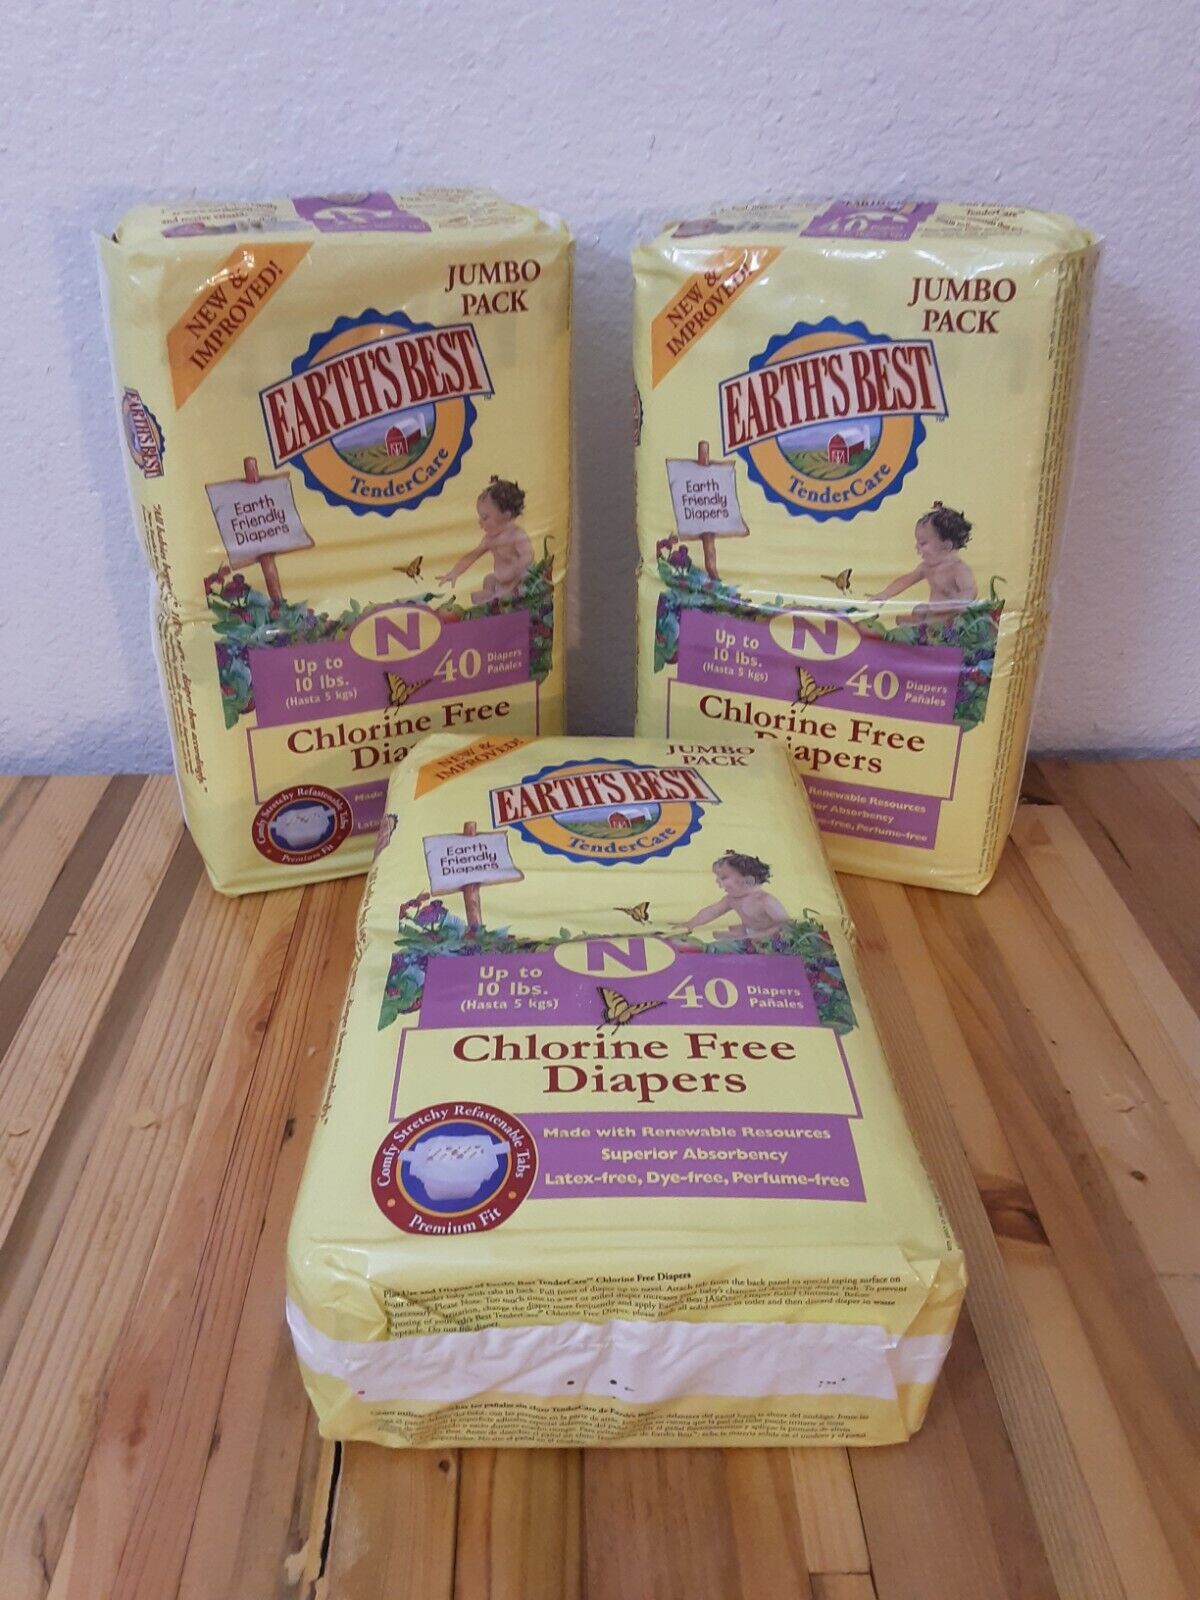 Earth's Best Earth Friendly Diapers Jumbo 40ct Chlorine Free 10 lbs. Pack of 3